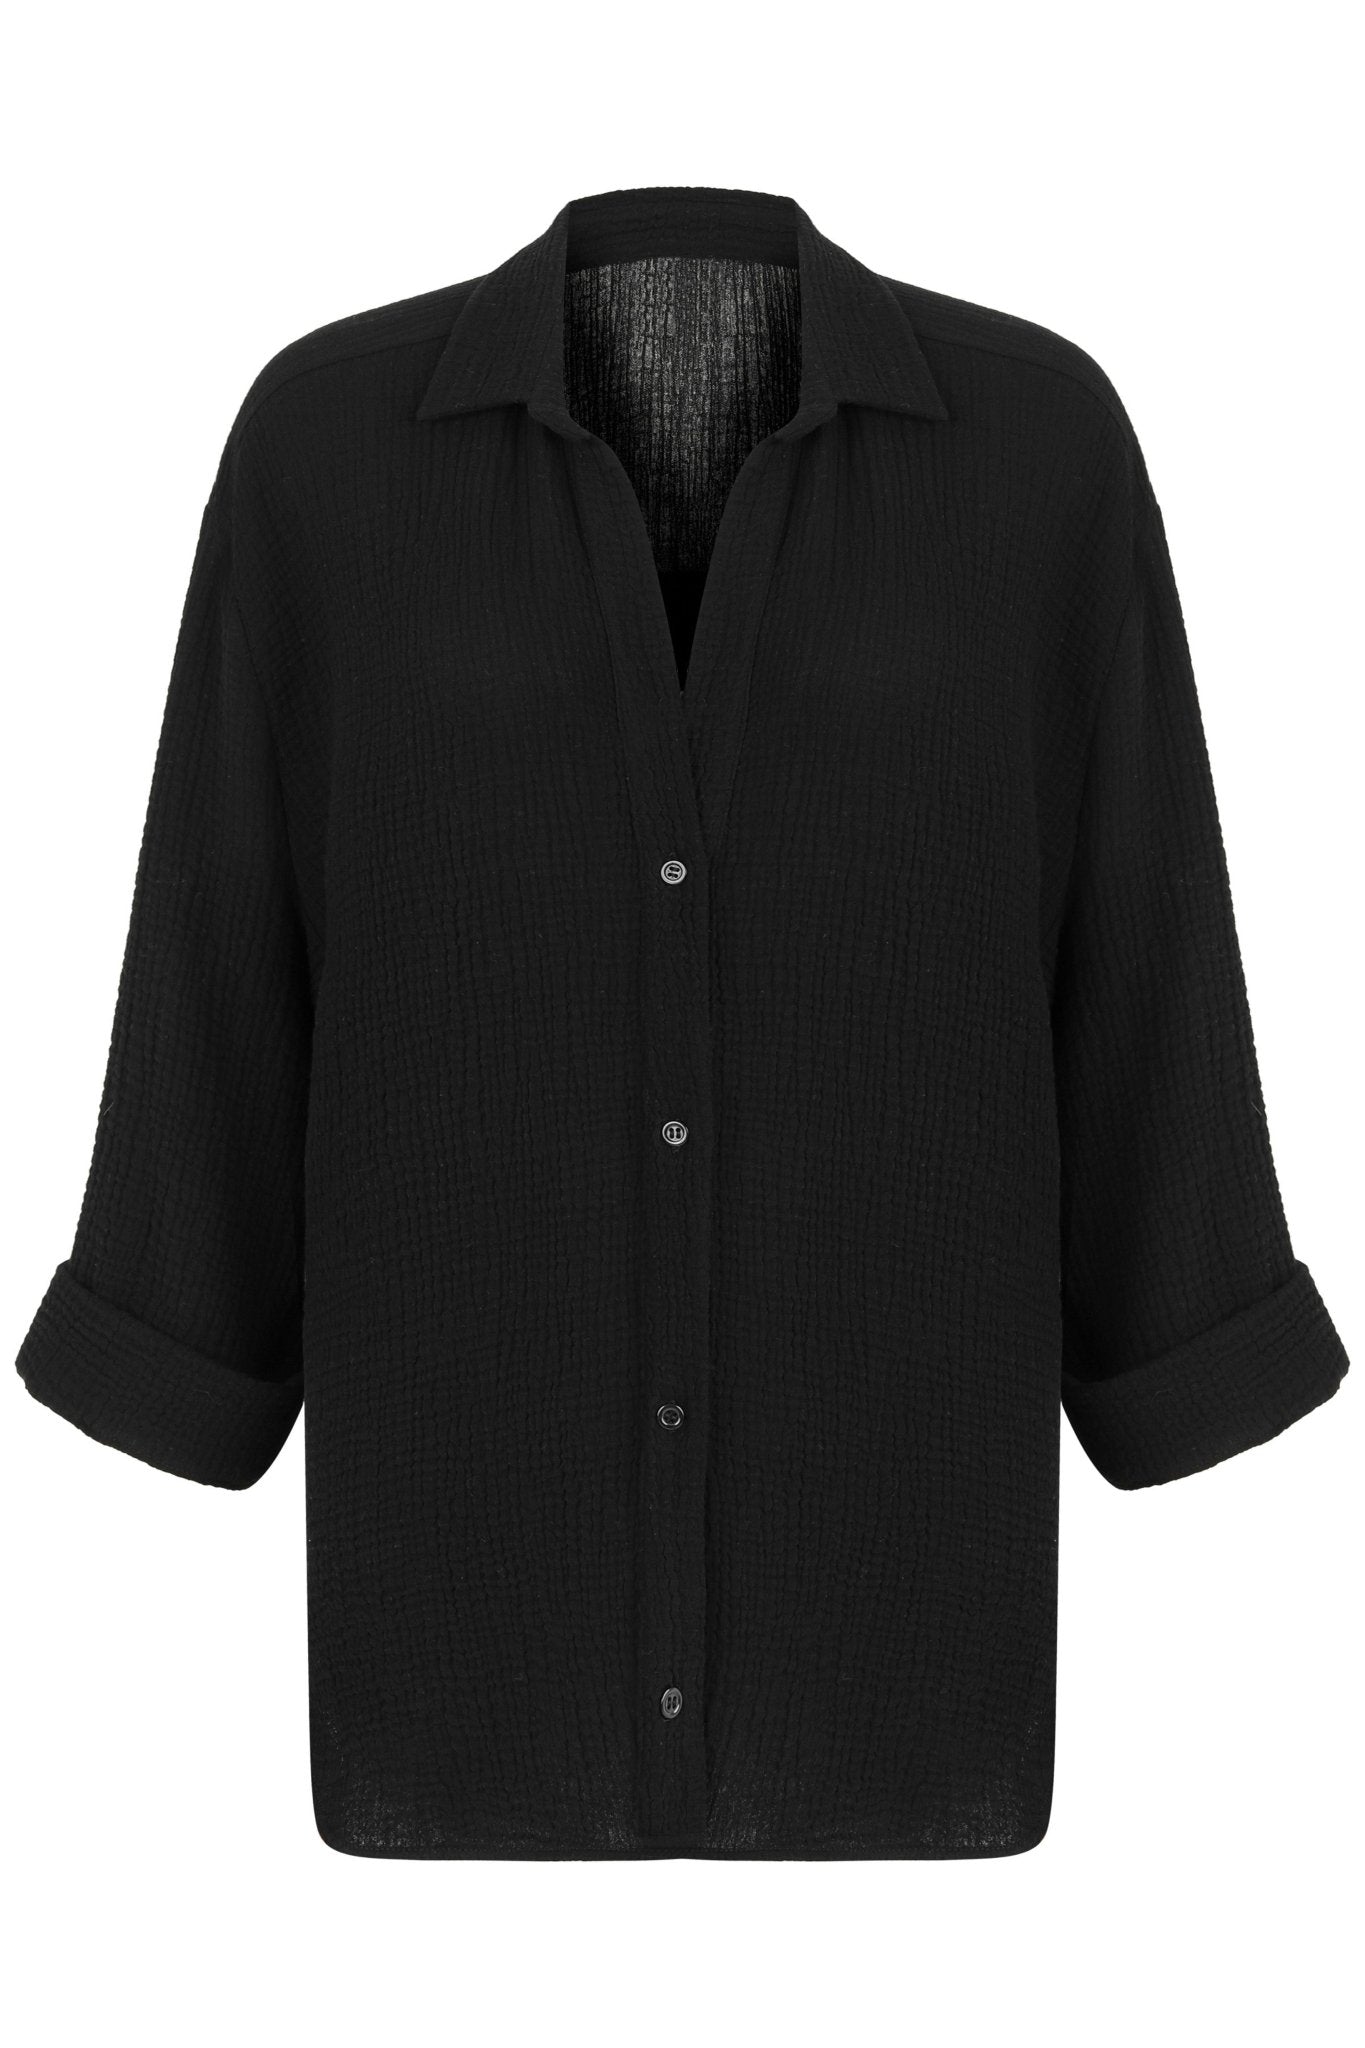 Echo Maxi Shirt - Black by The Handloom